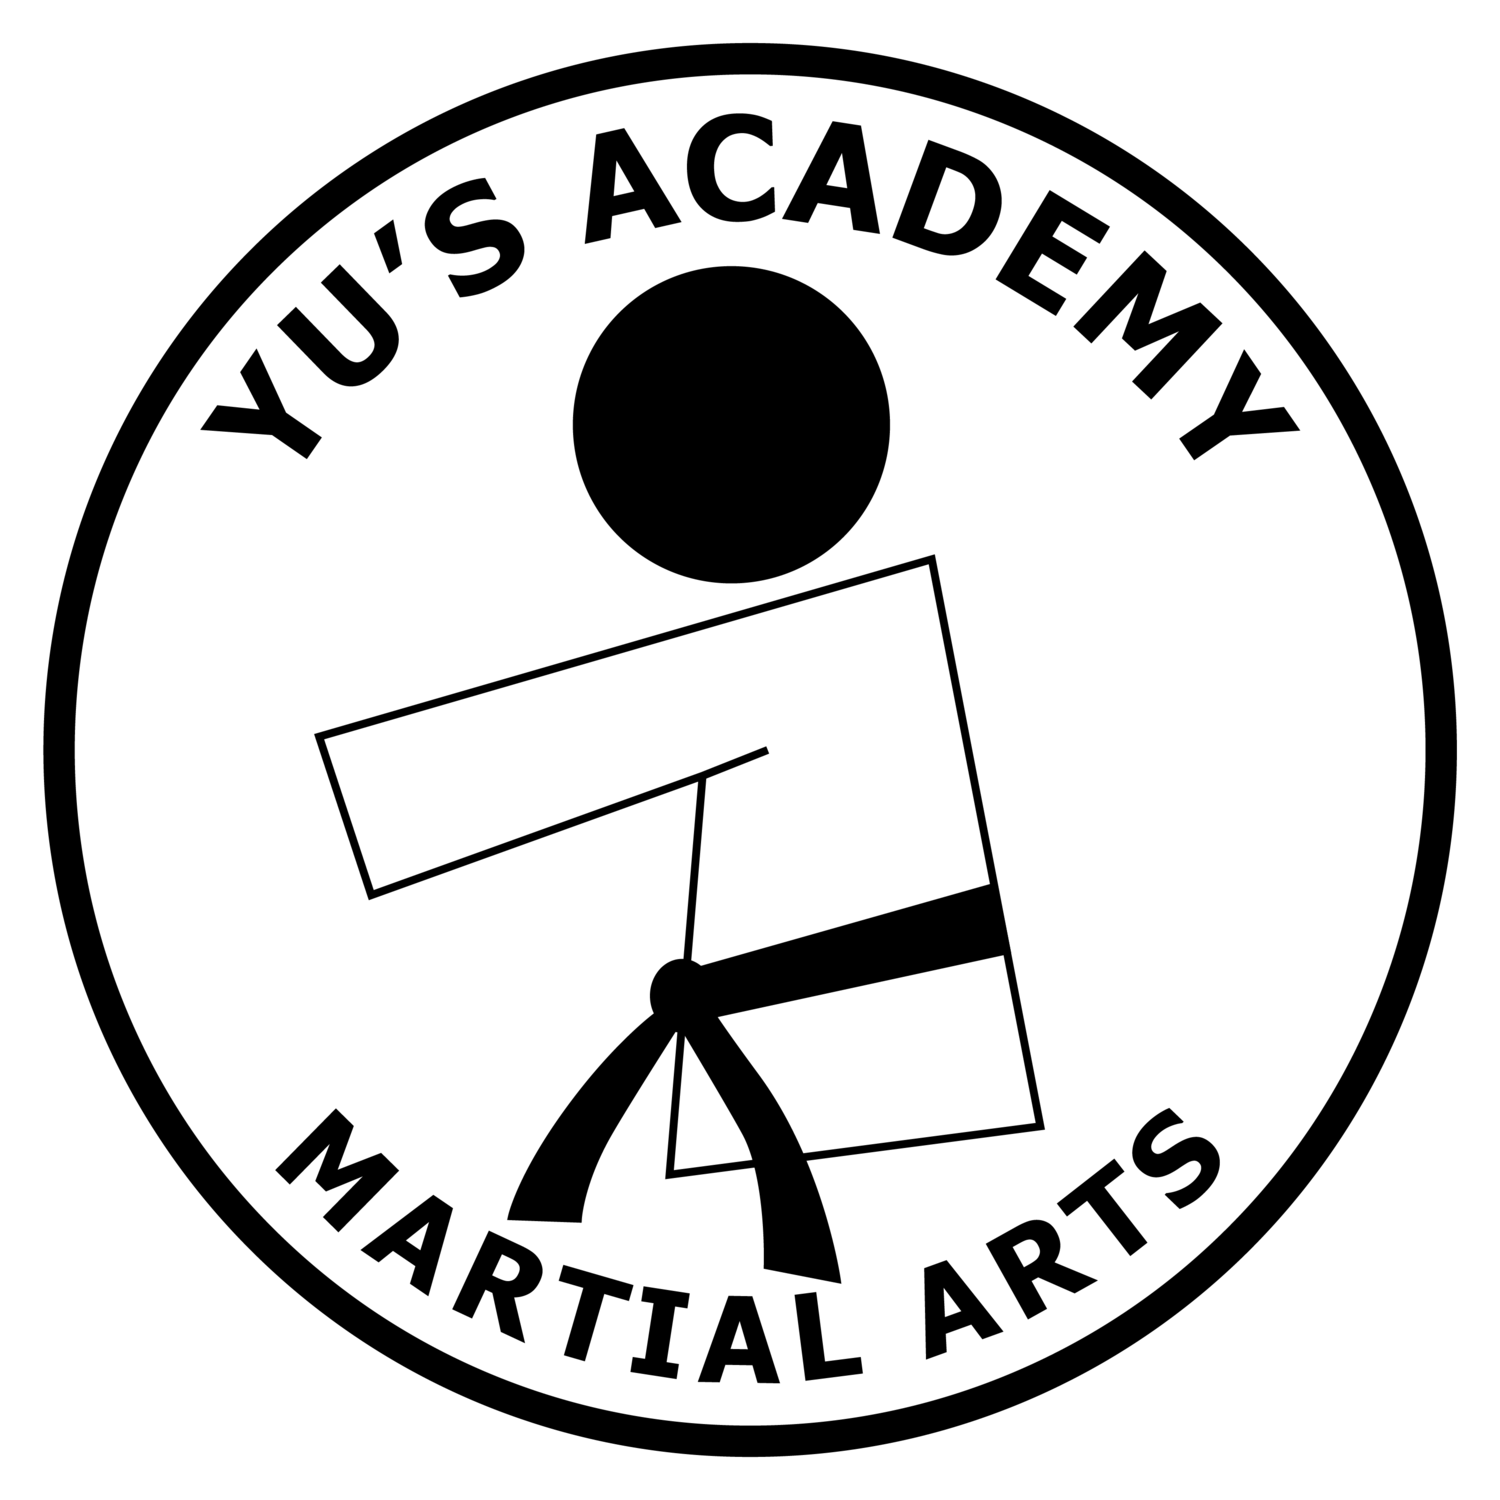 Yu's Academy of Martial Arts